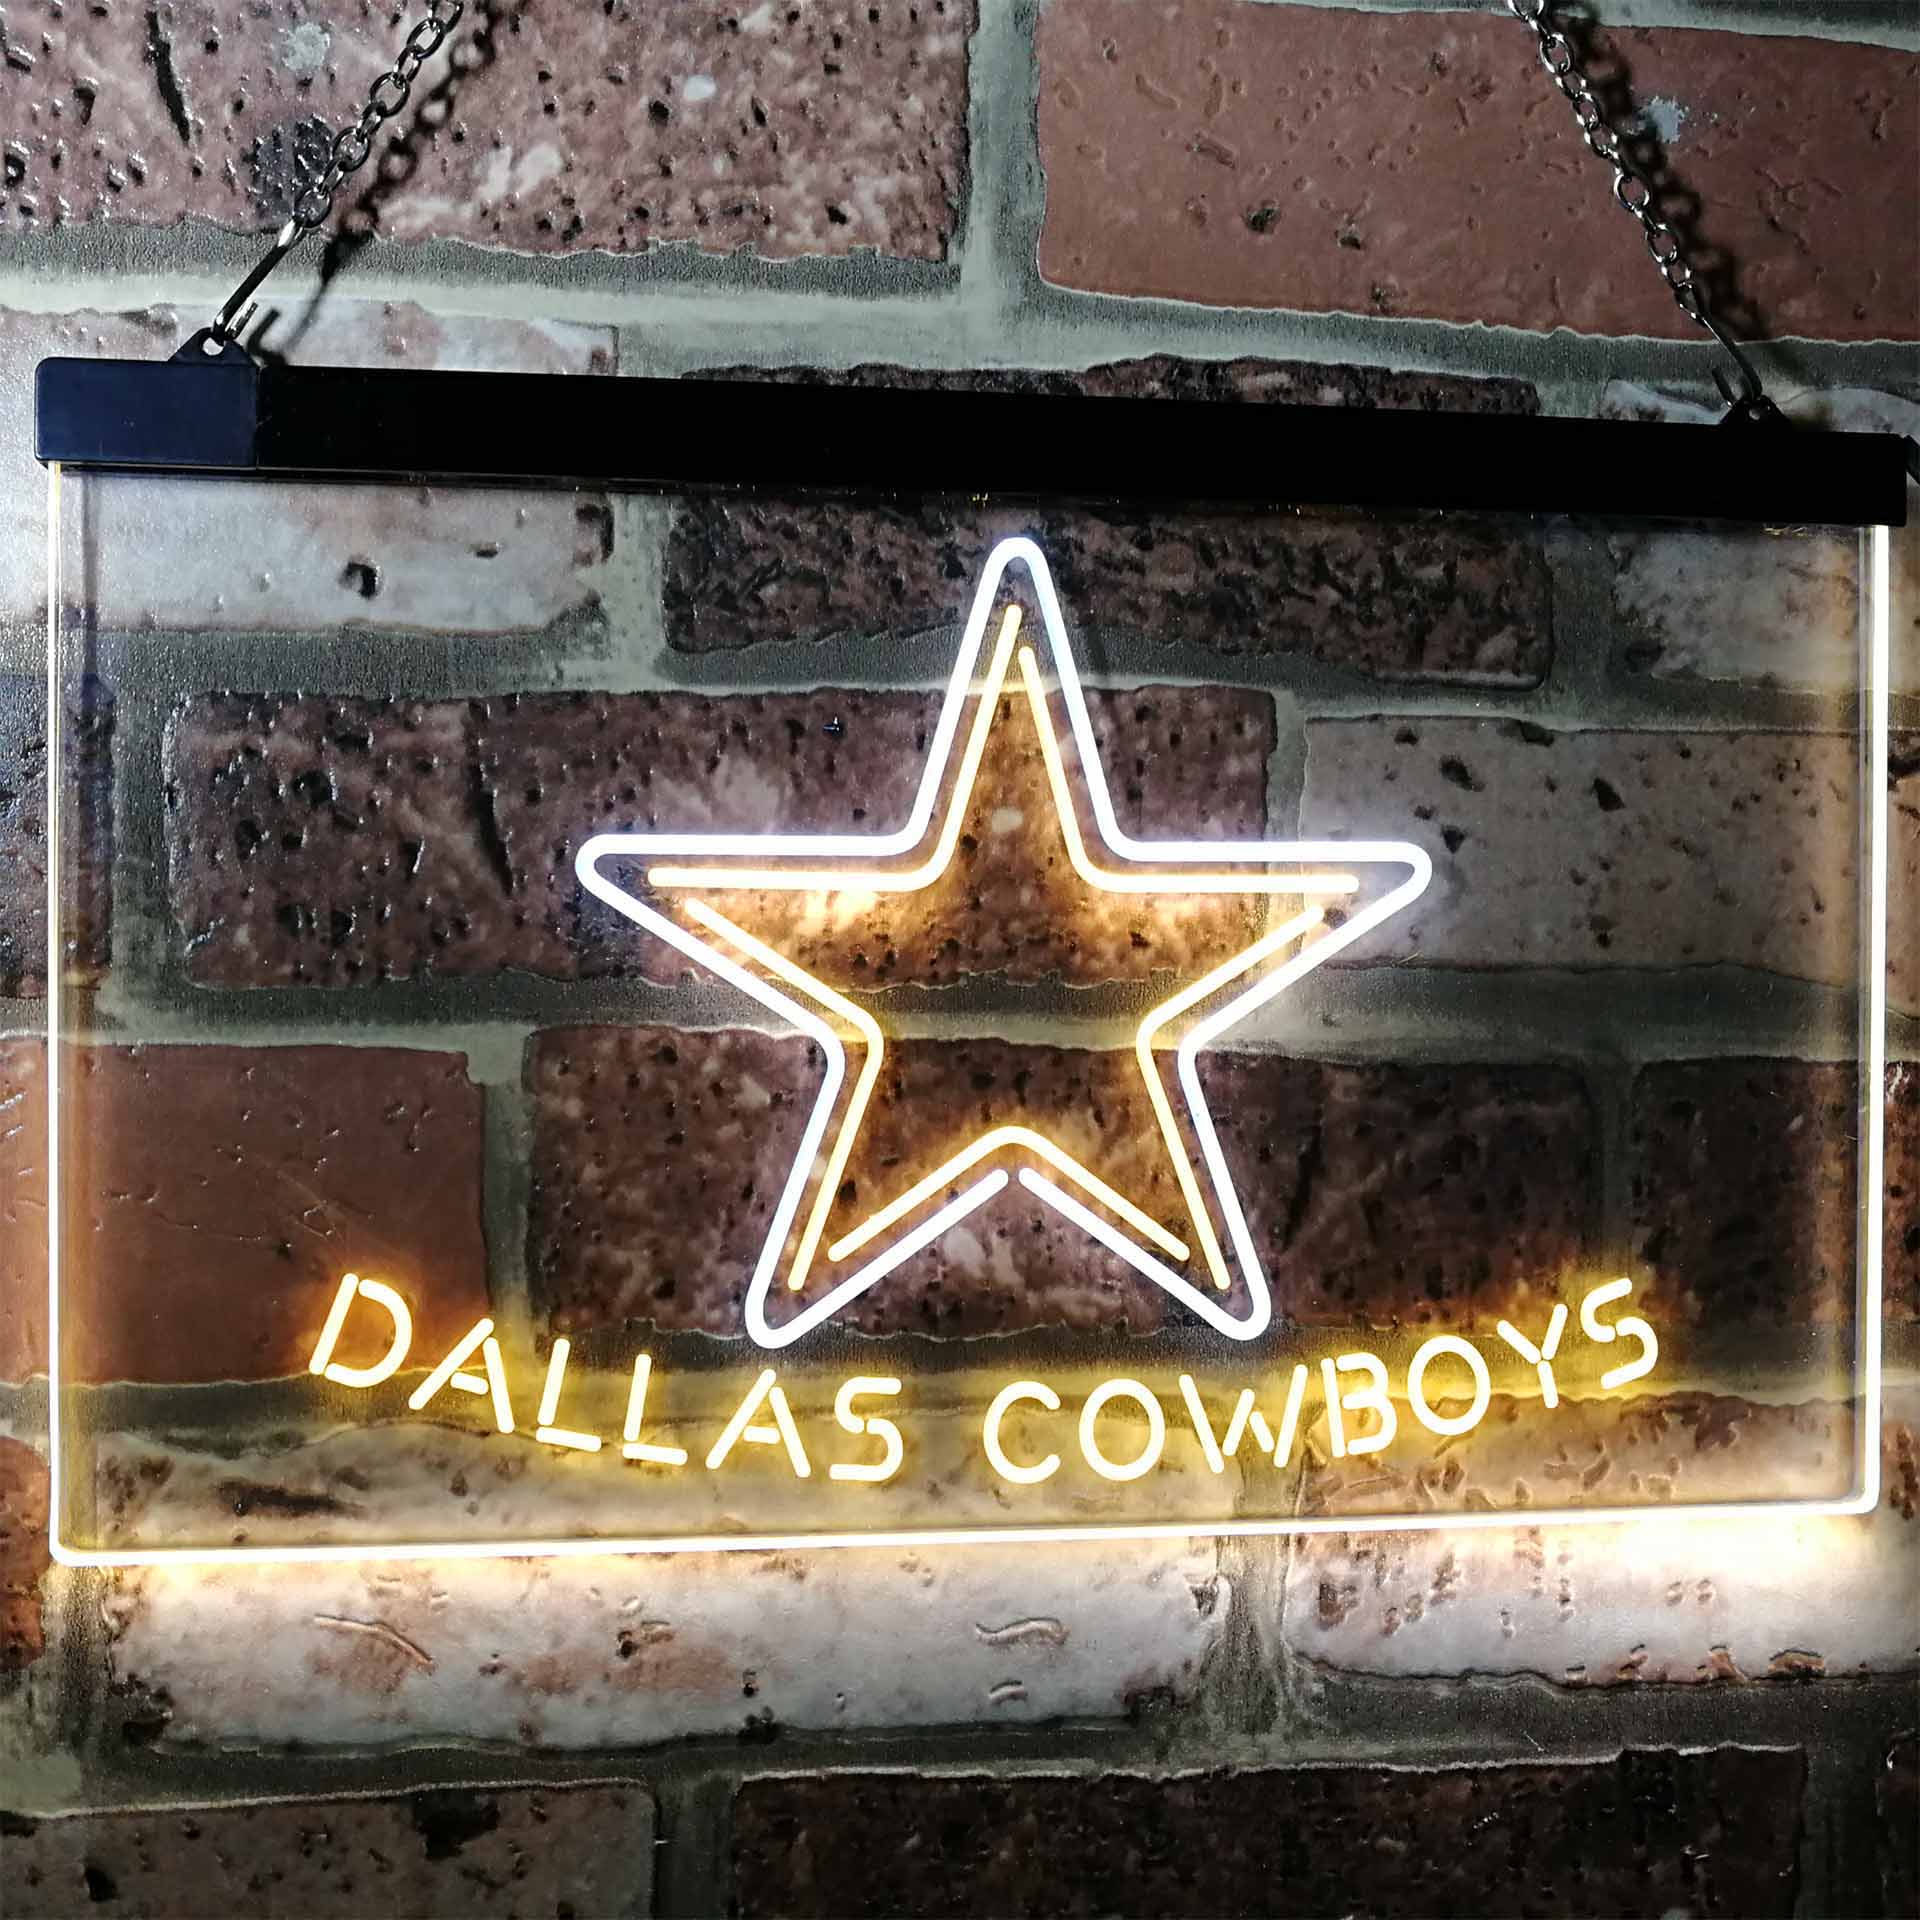 Star Cowboys Football Club Dallas Man Cave Neon Sign